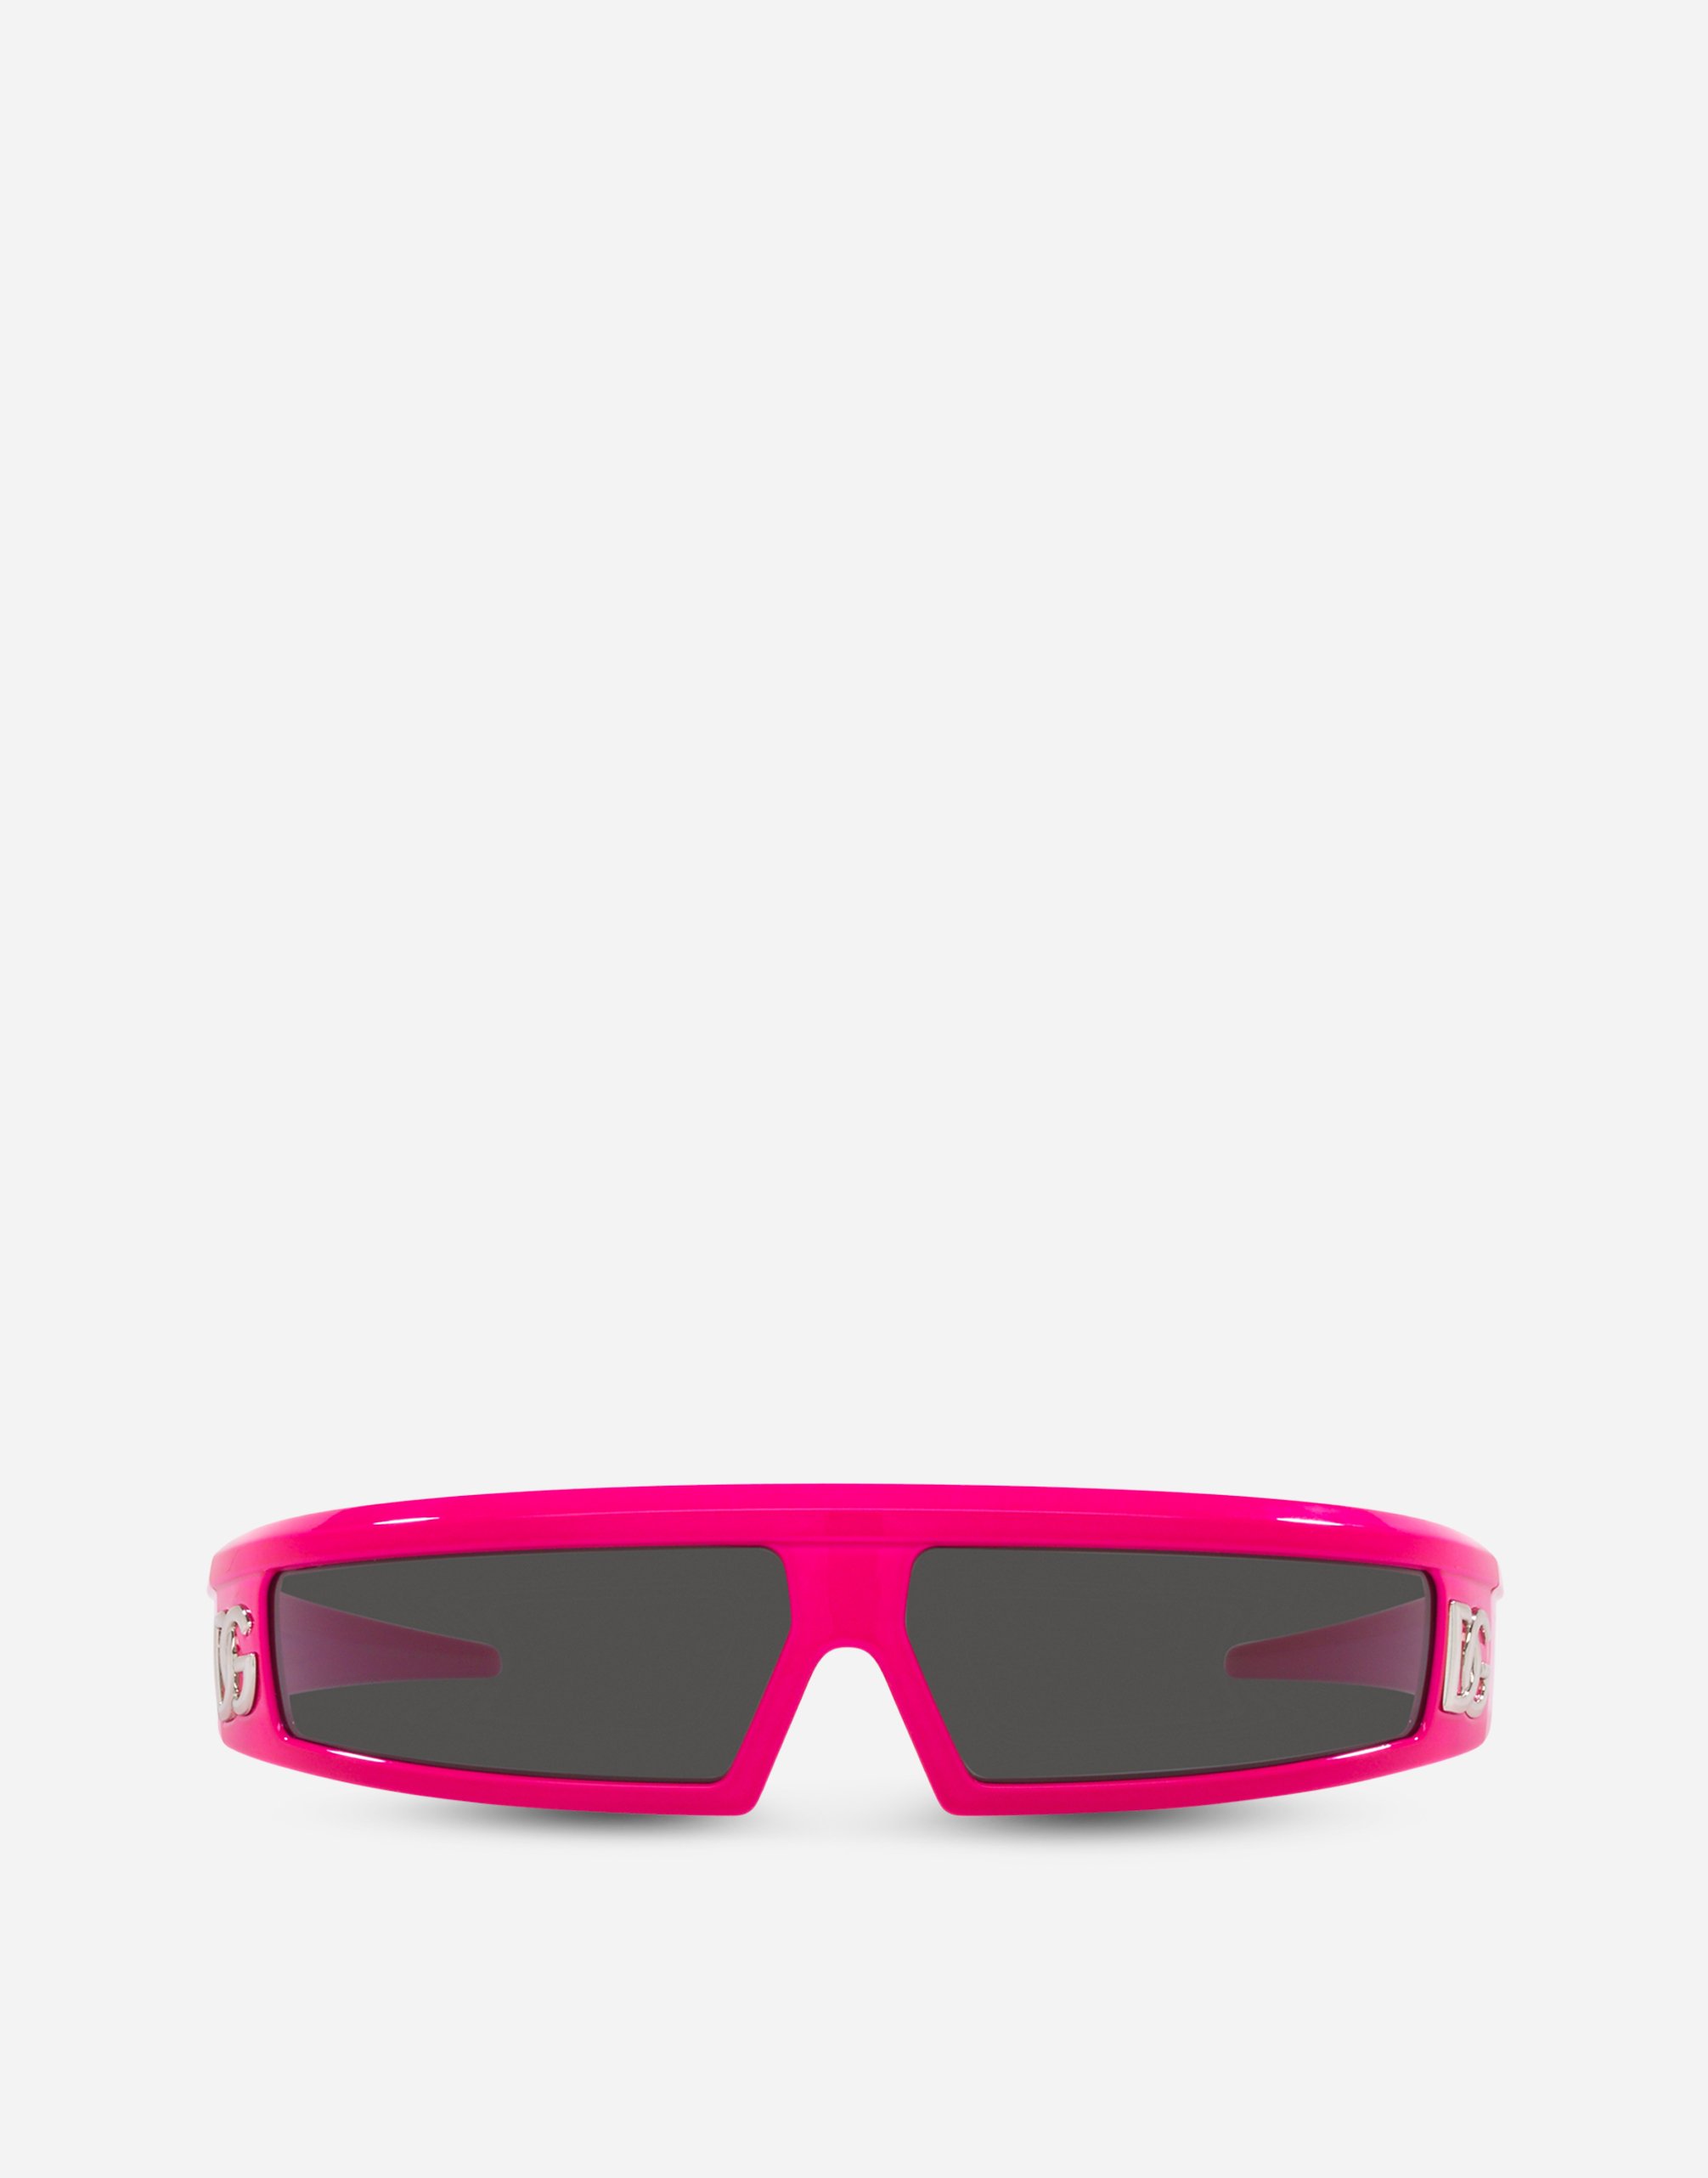 Narrow Sunglasses in Fuchsia